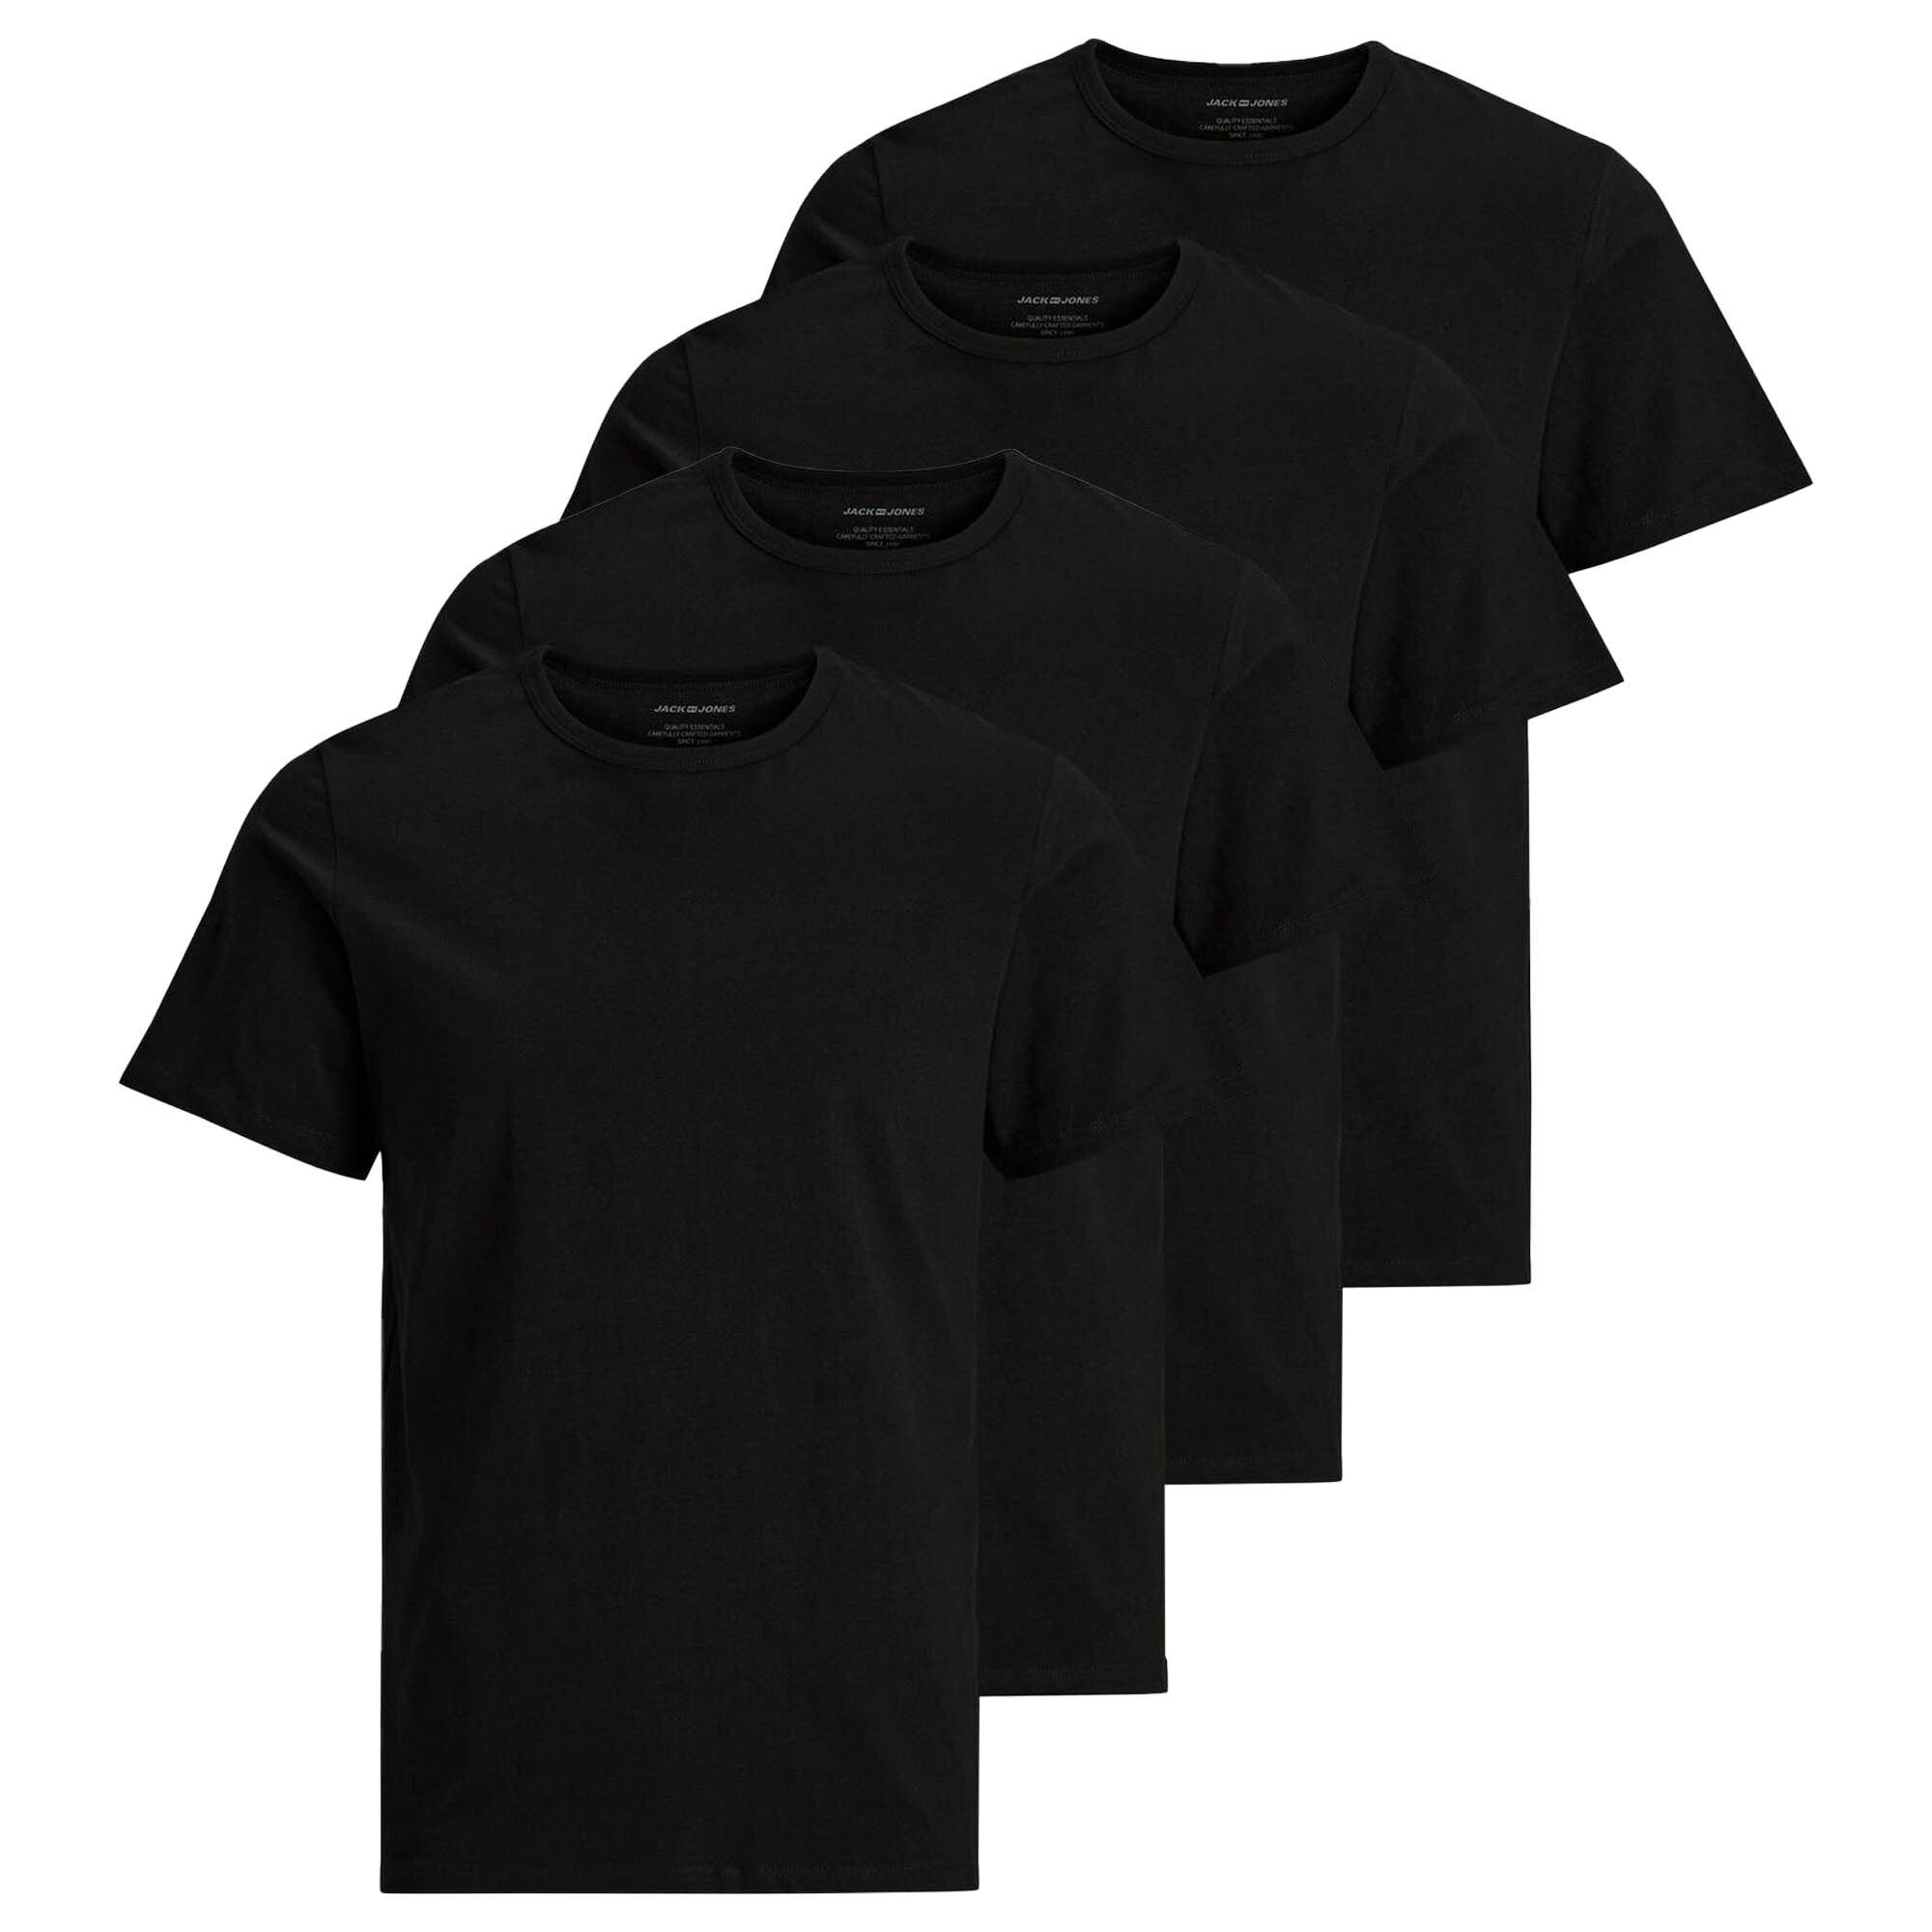 Jack & CREW - Jones JACBASIC TEE Herren T-Shirt, 4er Pack Schwarz NECK T-Shirt